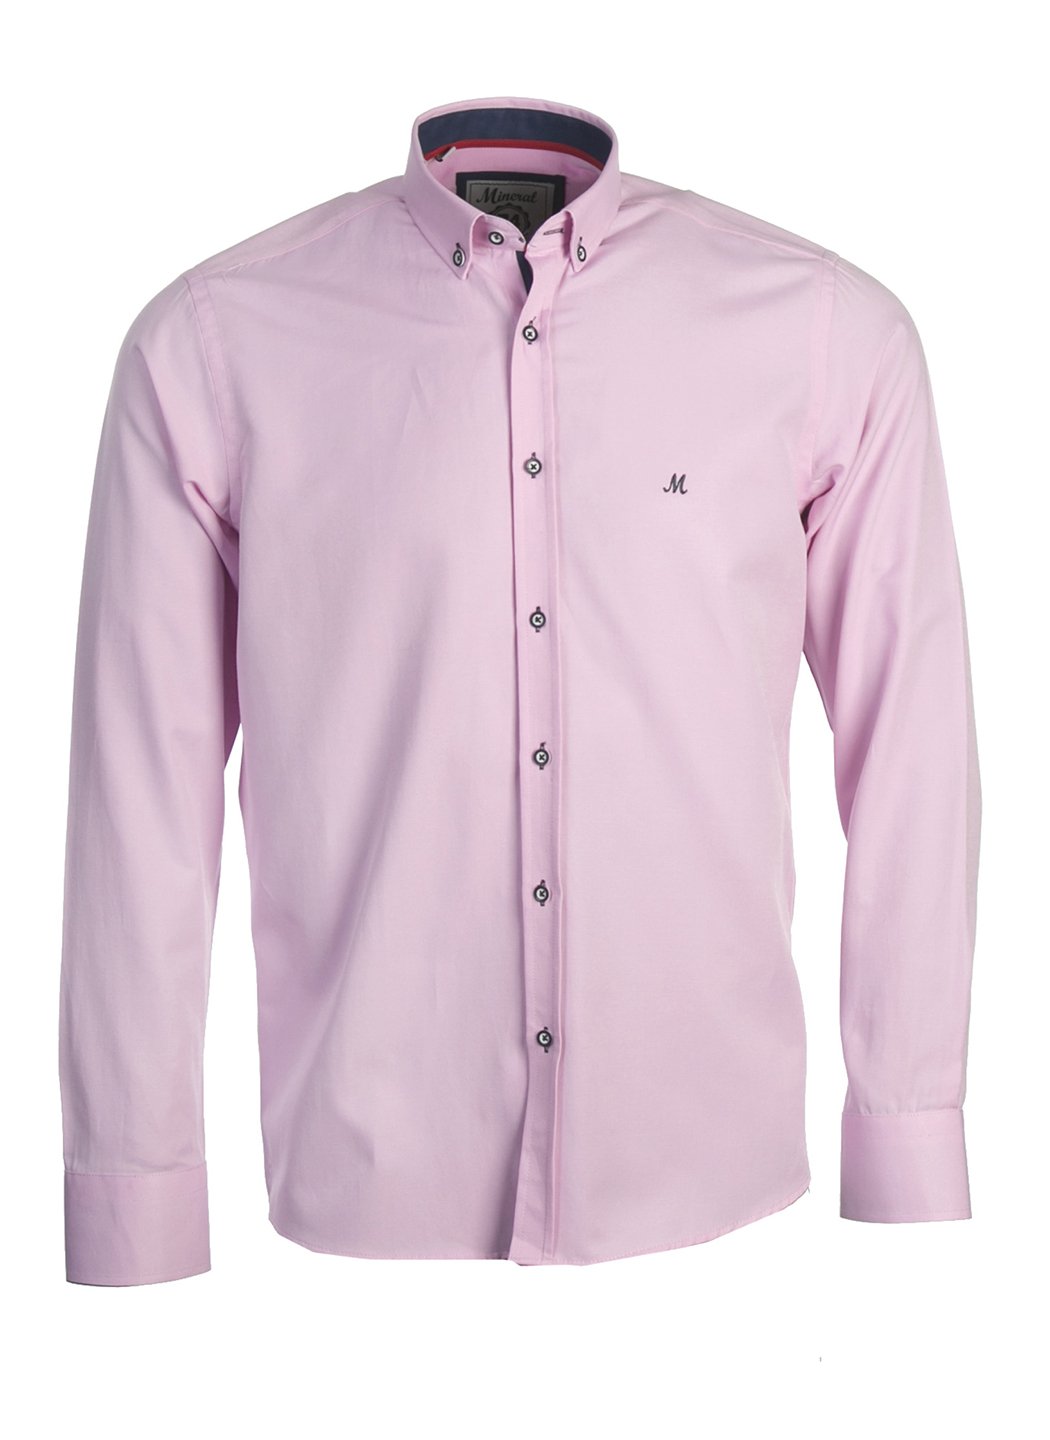 Lolland Oxford Long Sleeve Shirt